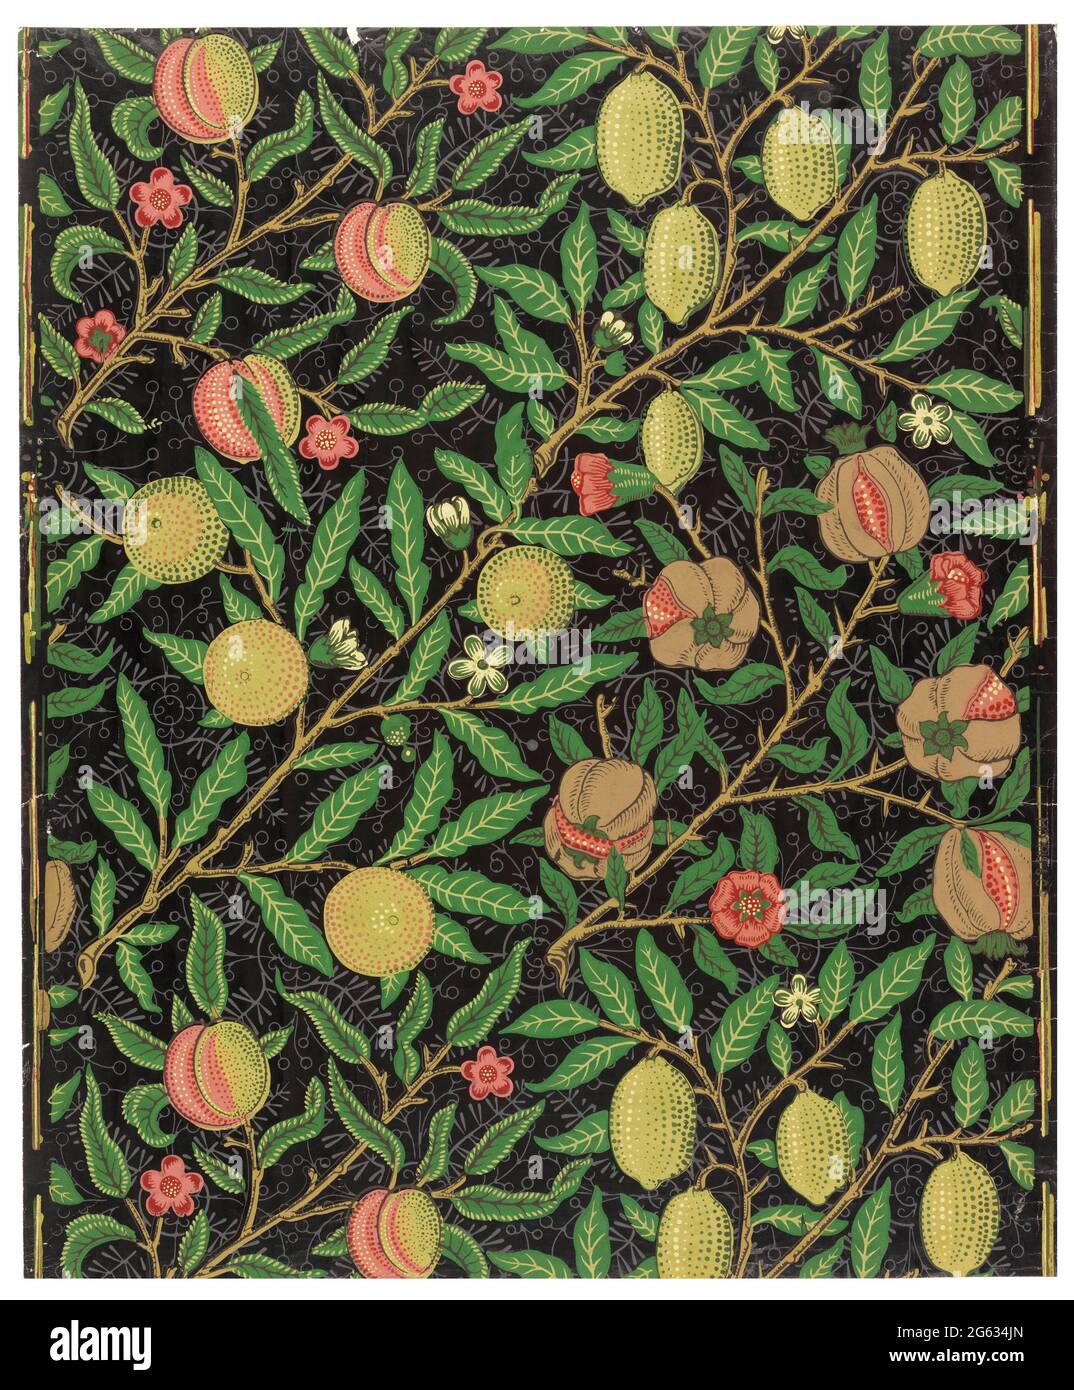 William Morris, Fruit, wallpaper pattern, 1862 Stock Photo